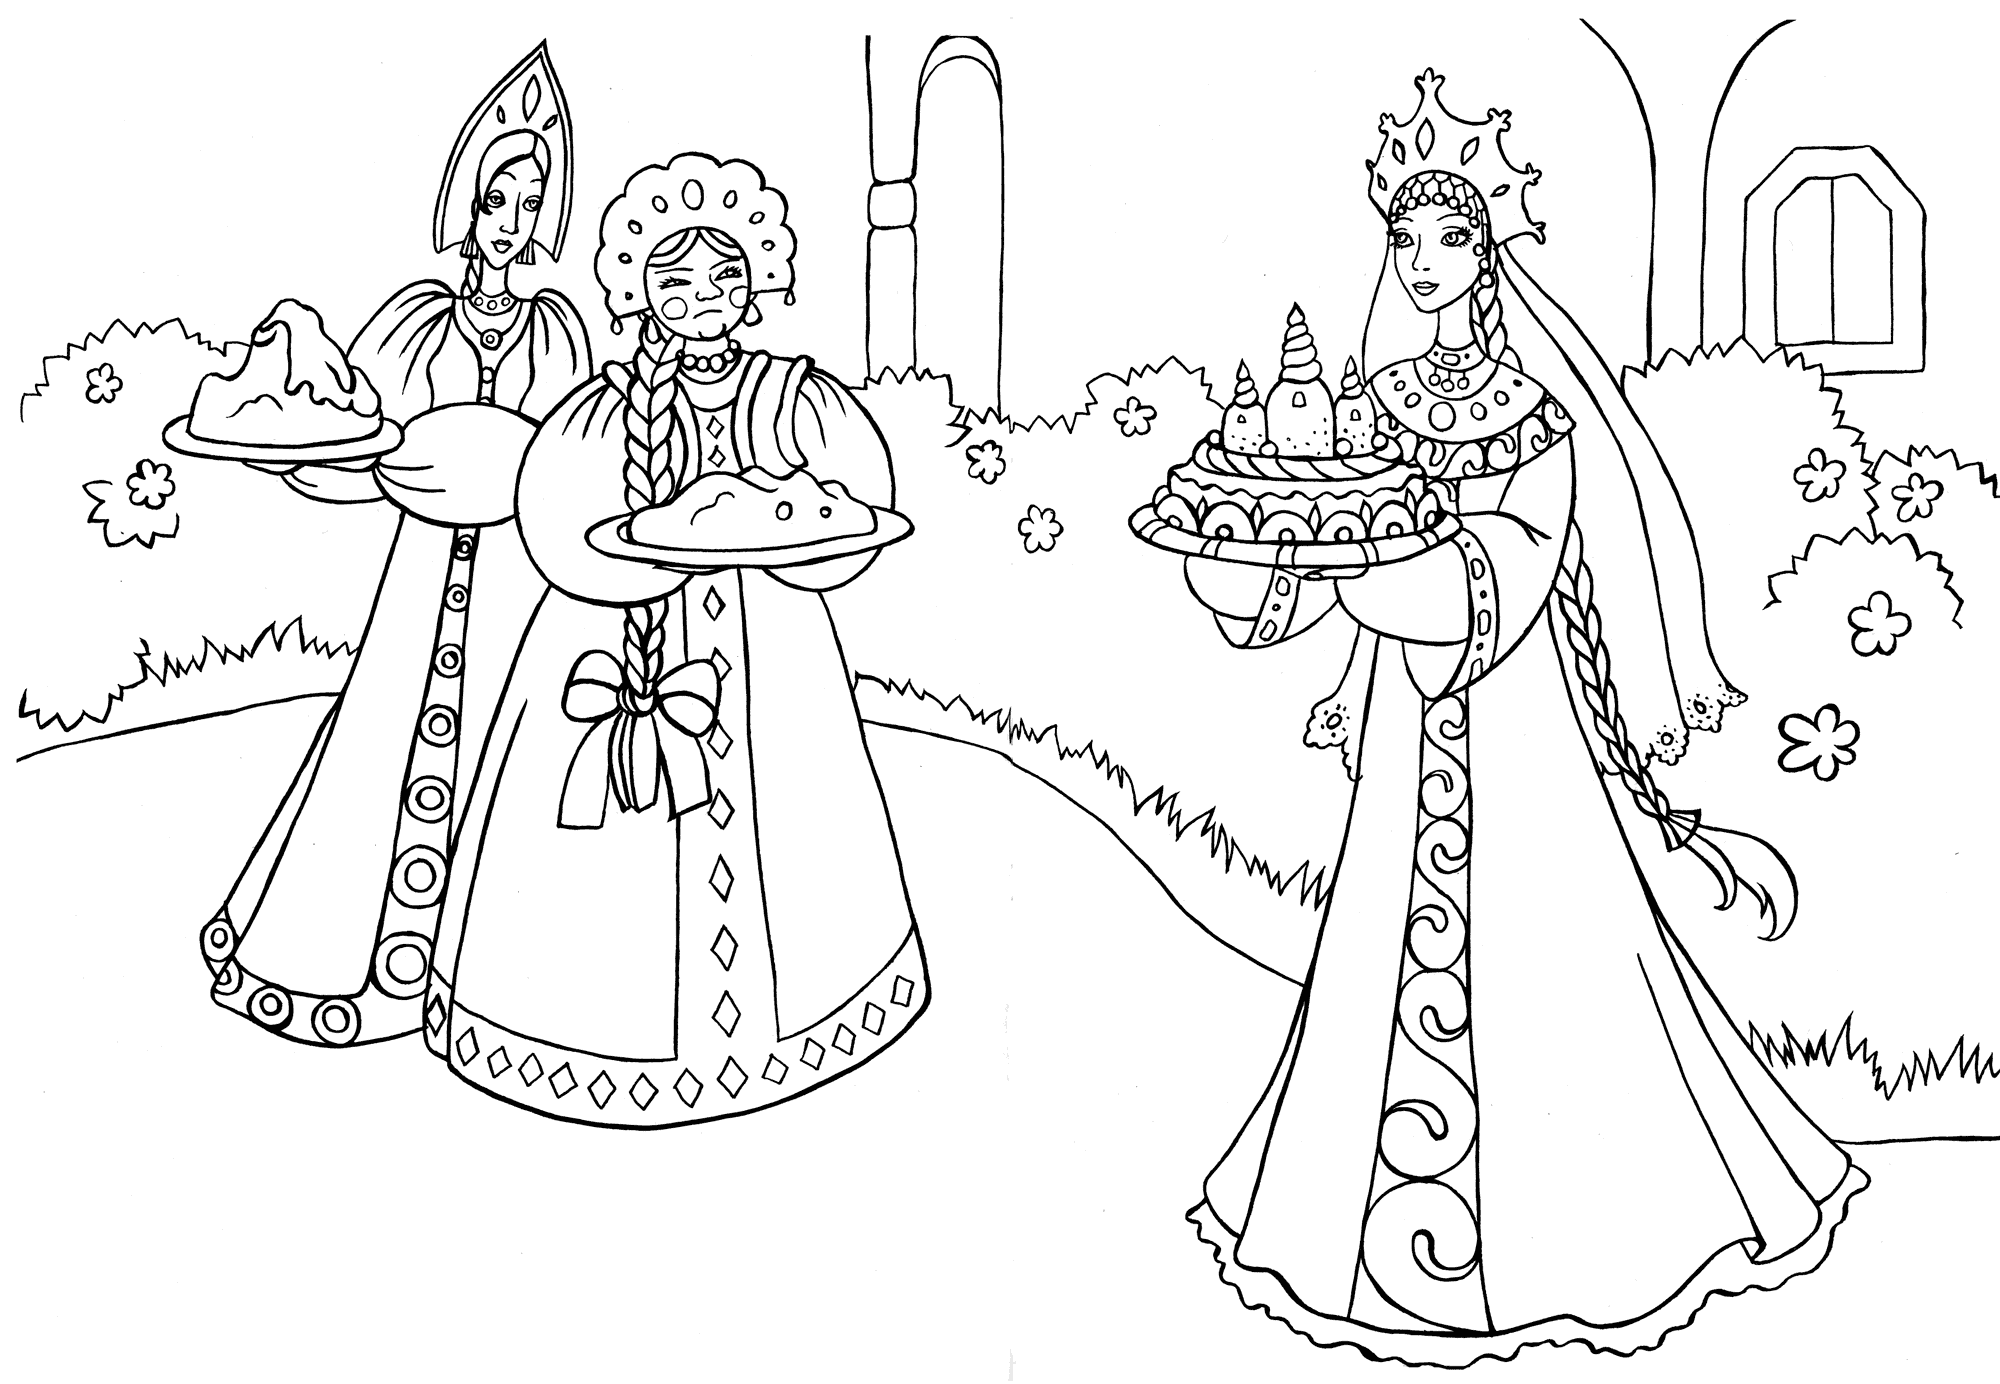 Розмальовки розмальовки до казки царівна жаба Три царівни, царівни з хлібом, розфарбування по казці